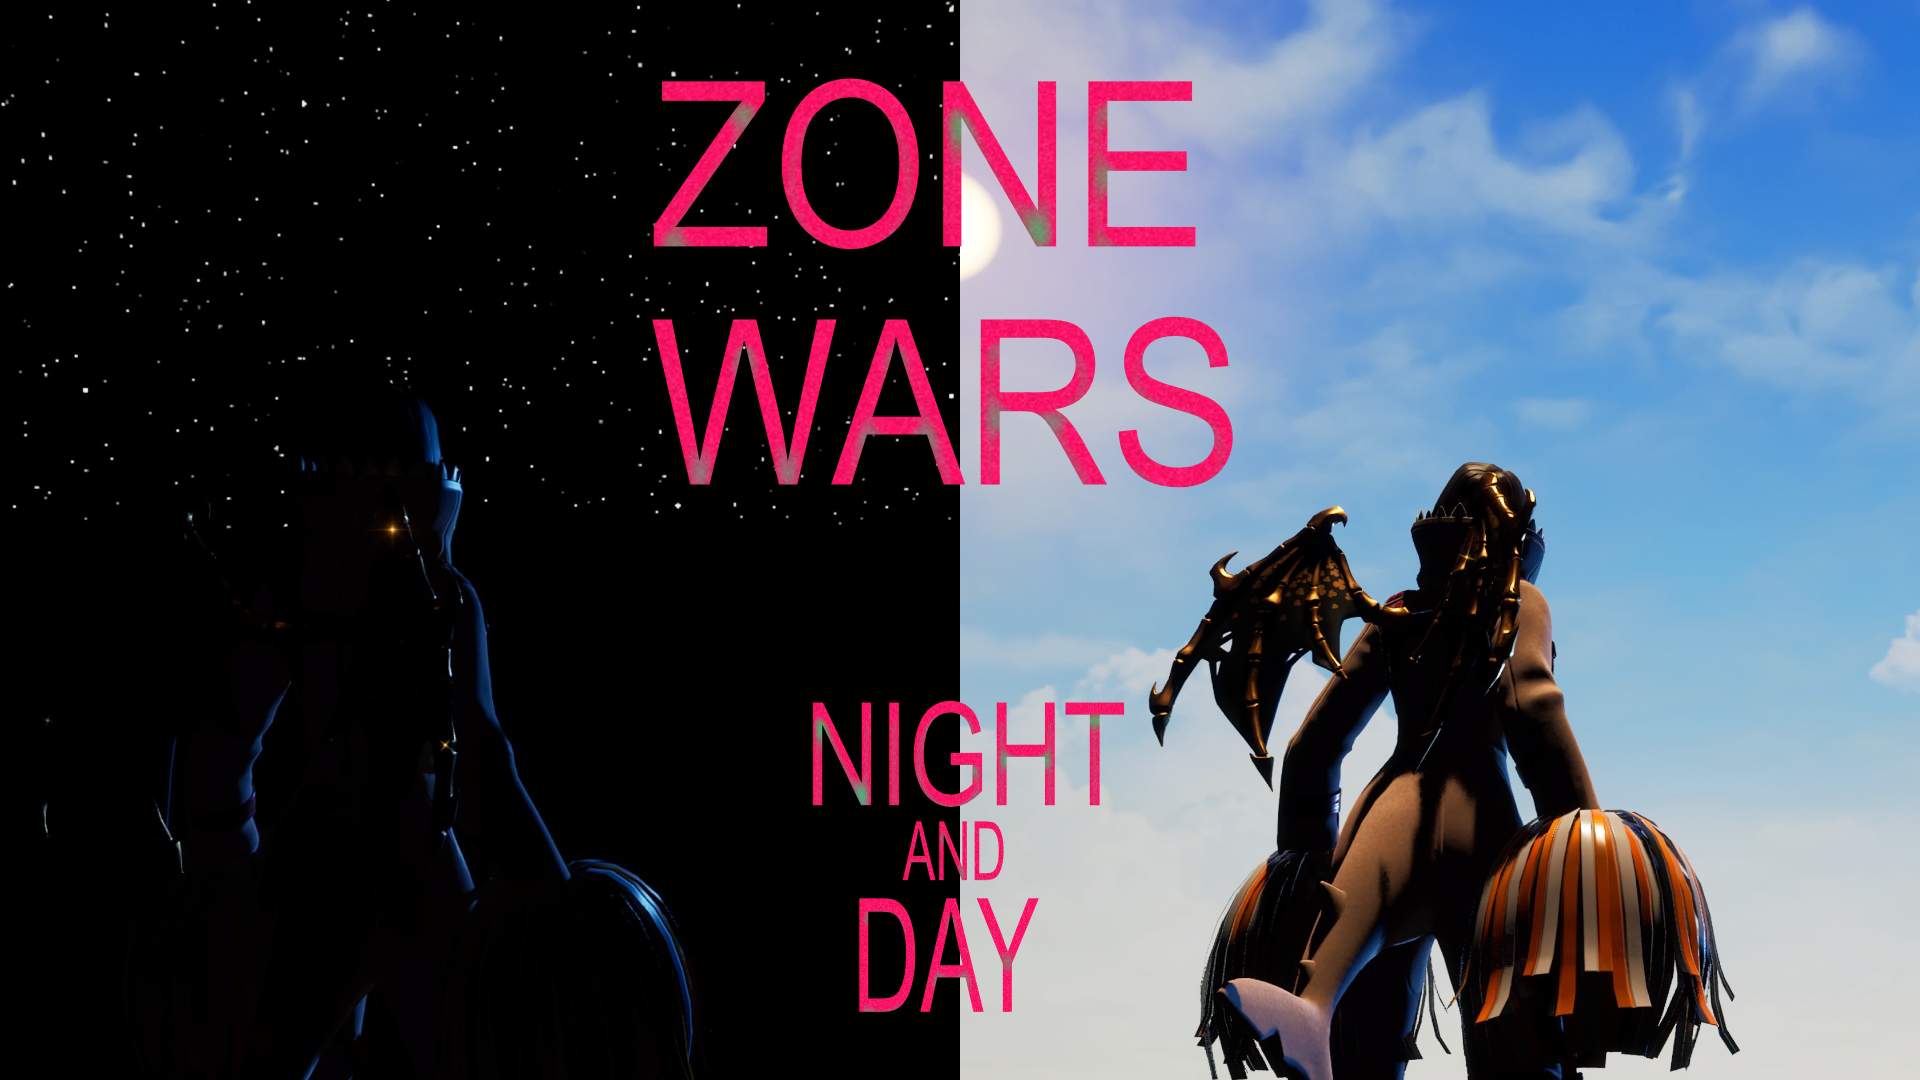 NIGHT & DAY ZONE WARS